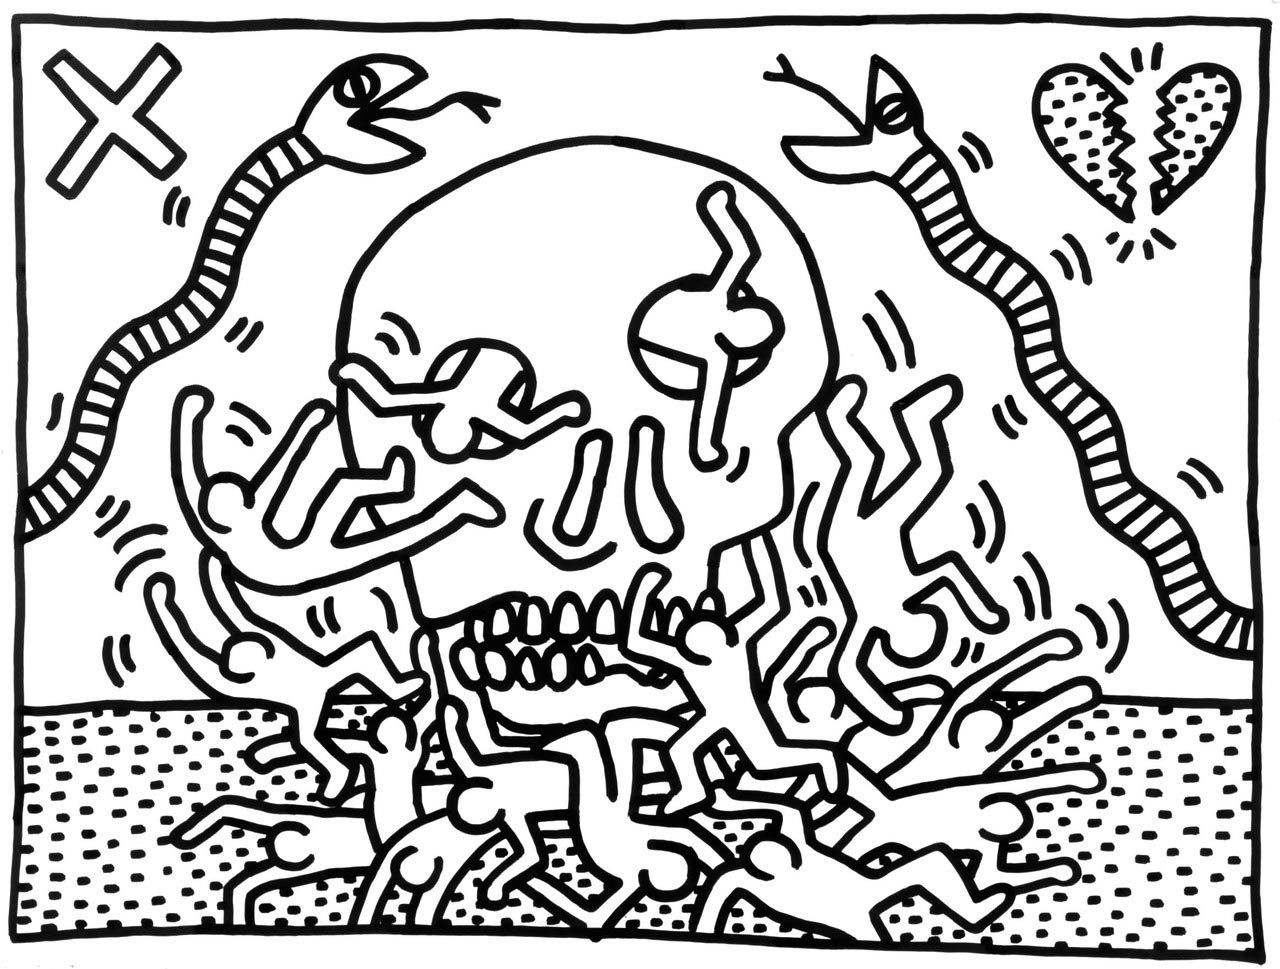 Keith Haring, snake, 1983